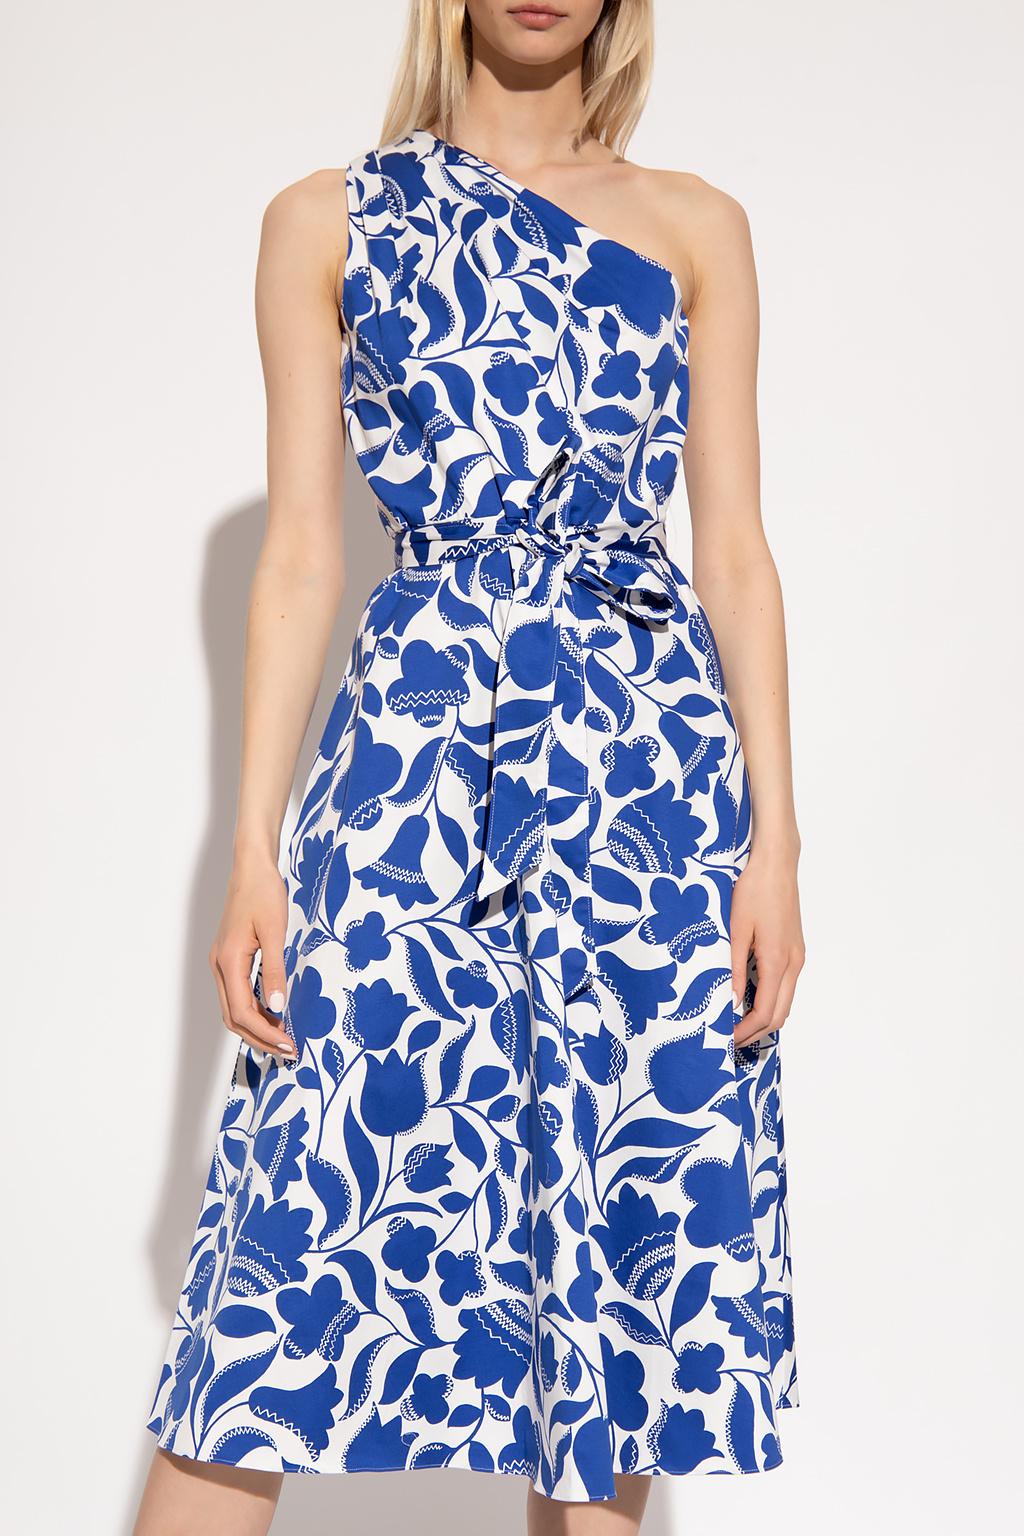 Kate Spade One-shoulder Dress in Blue | Lyst